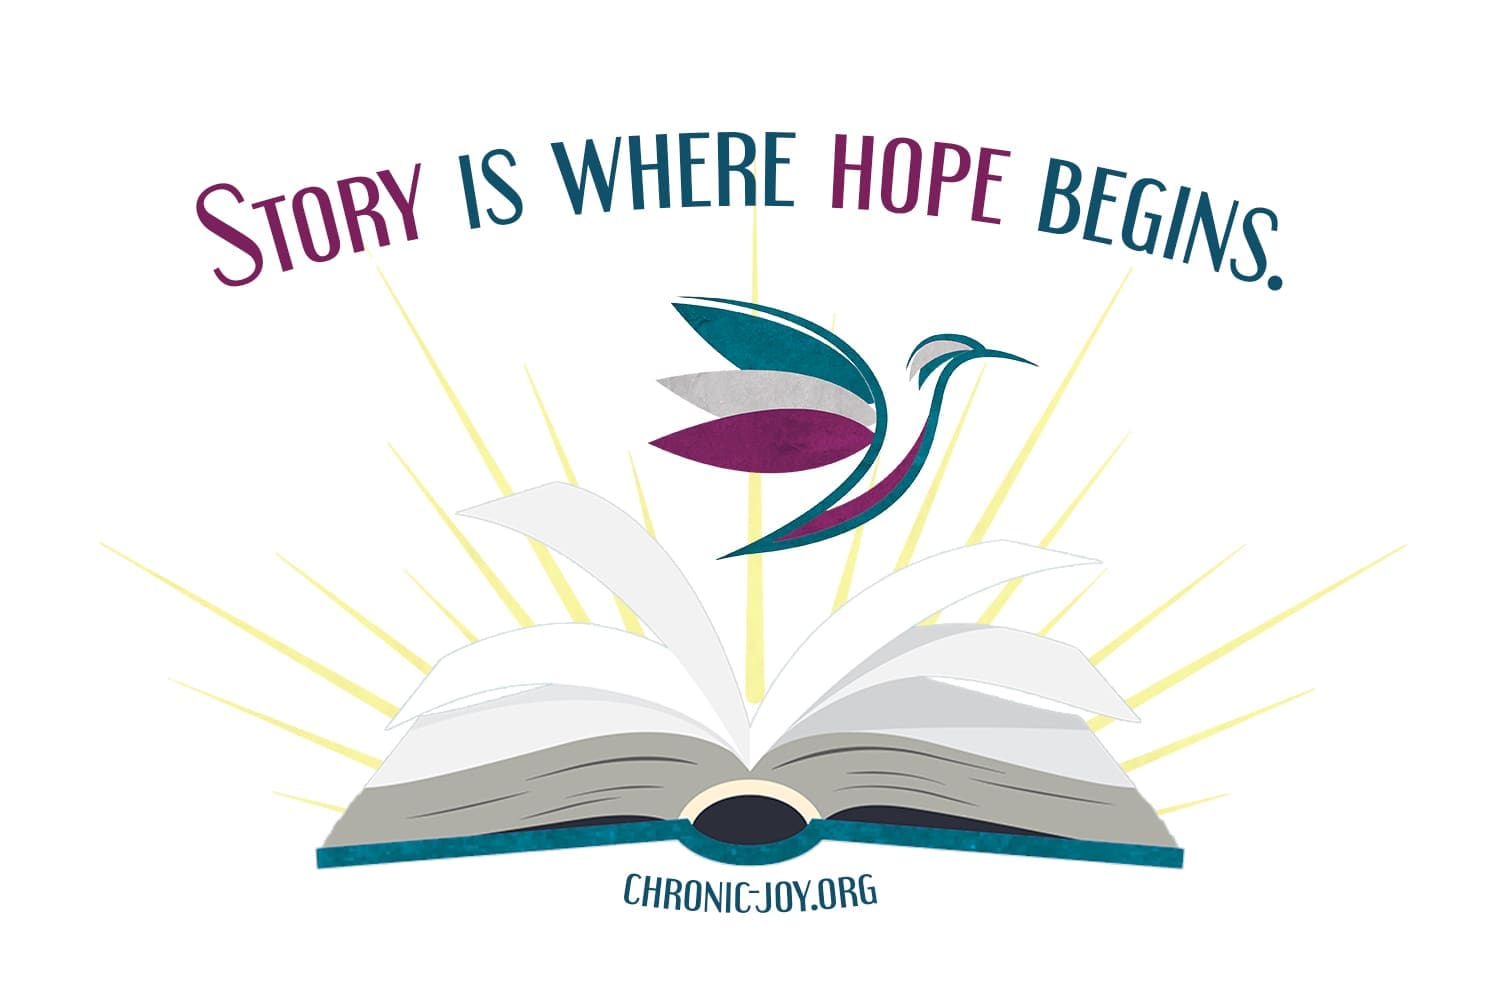 Story is where hope begins.